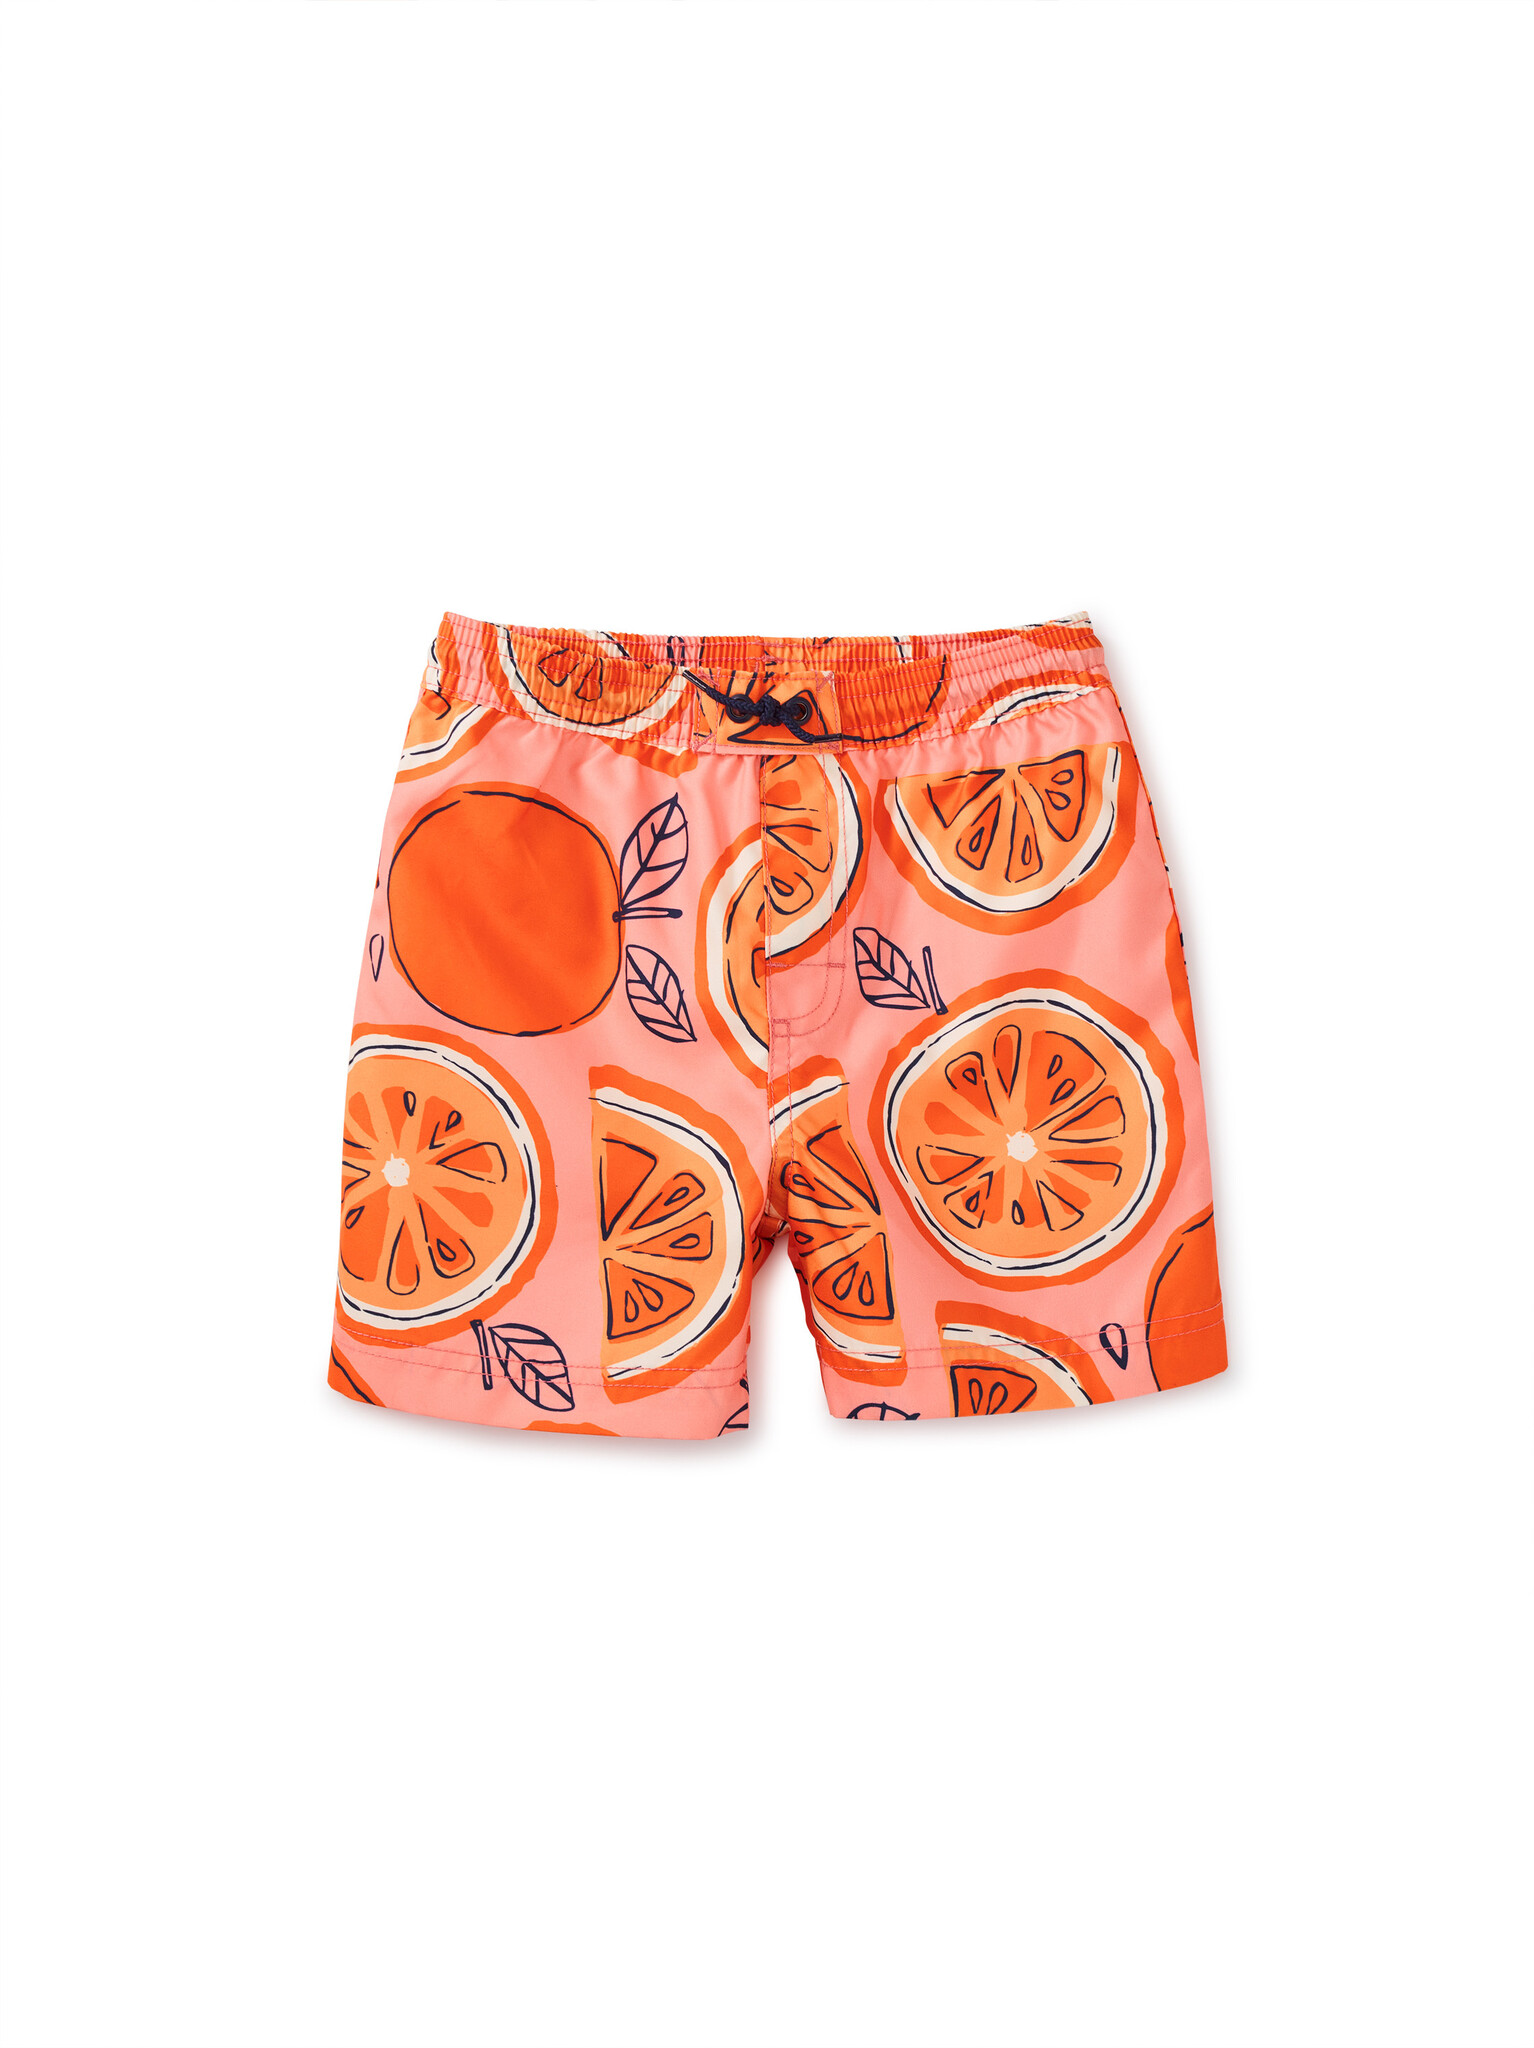 Tea Collection Printed Oranges Swim Trunks